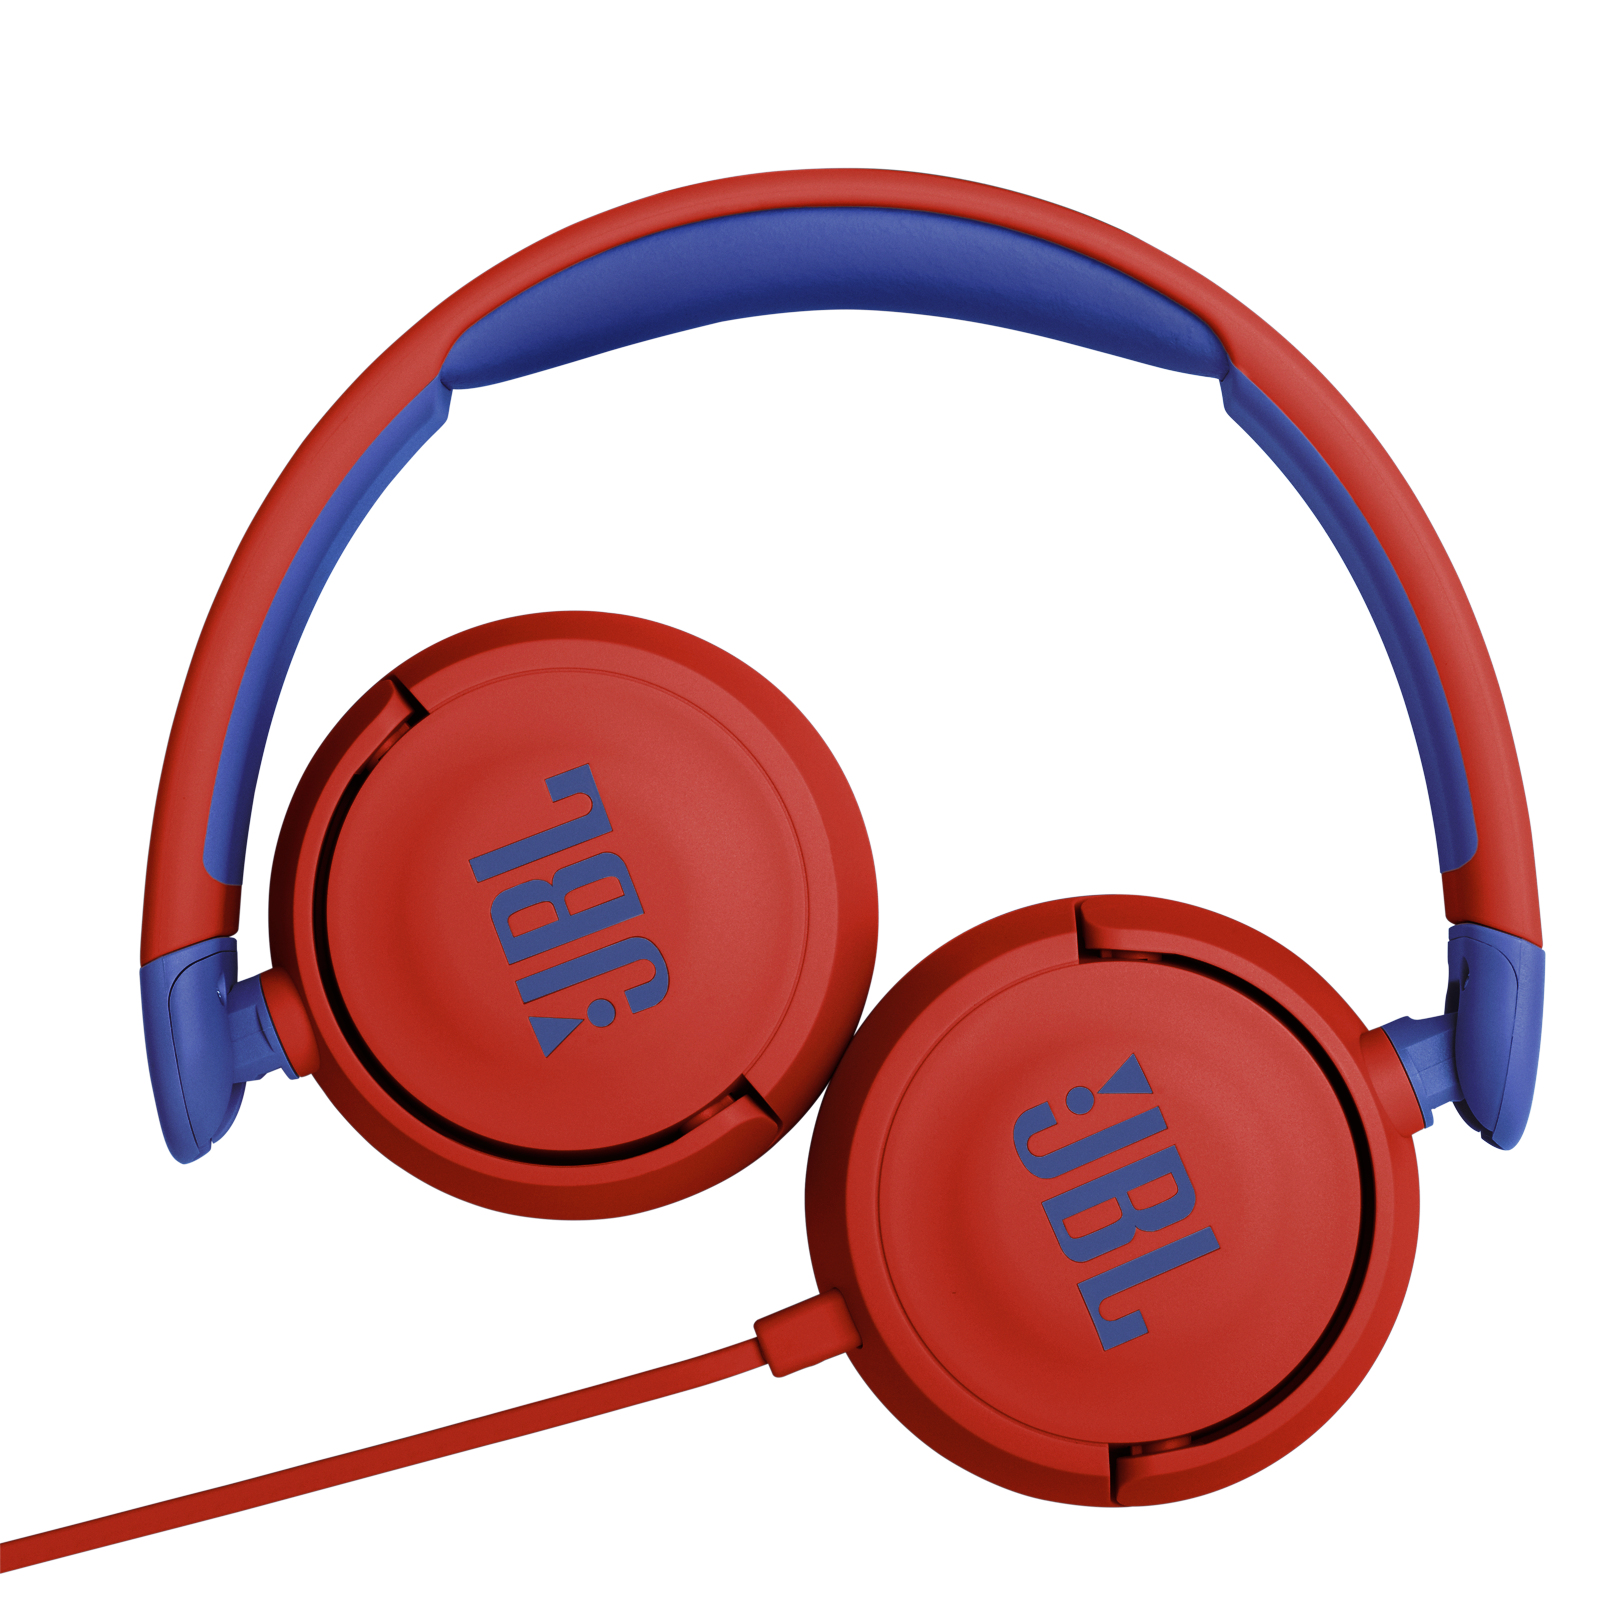 JBL Jr310 - Red - Kids on-ear Headphones - Detailshot 3